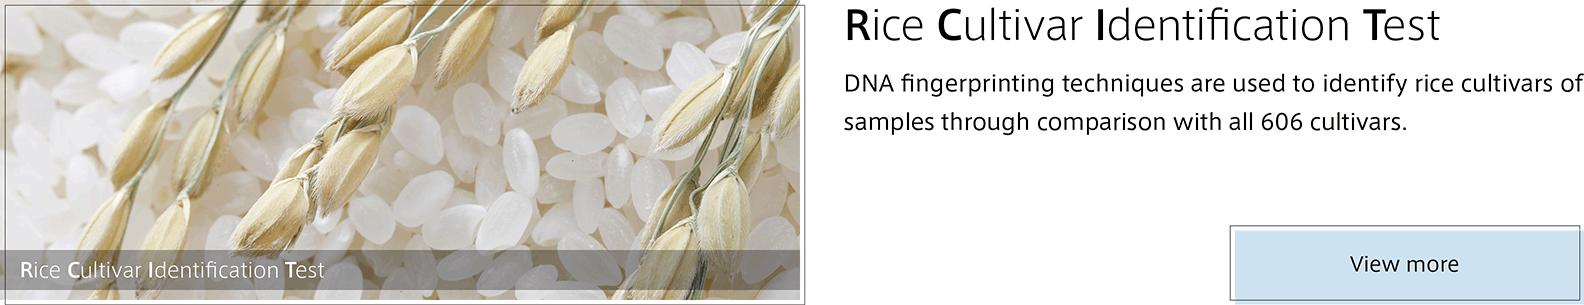 Rice Cultivar Identification Test